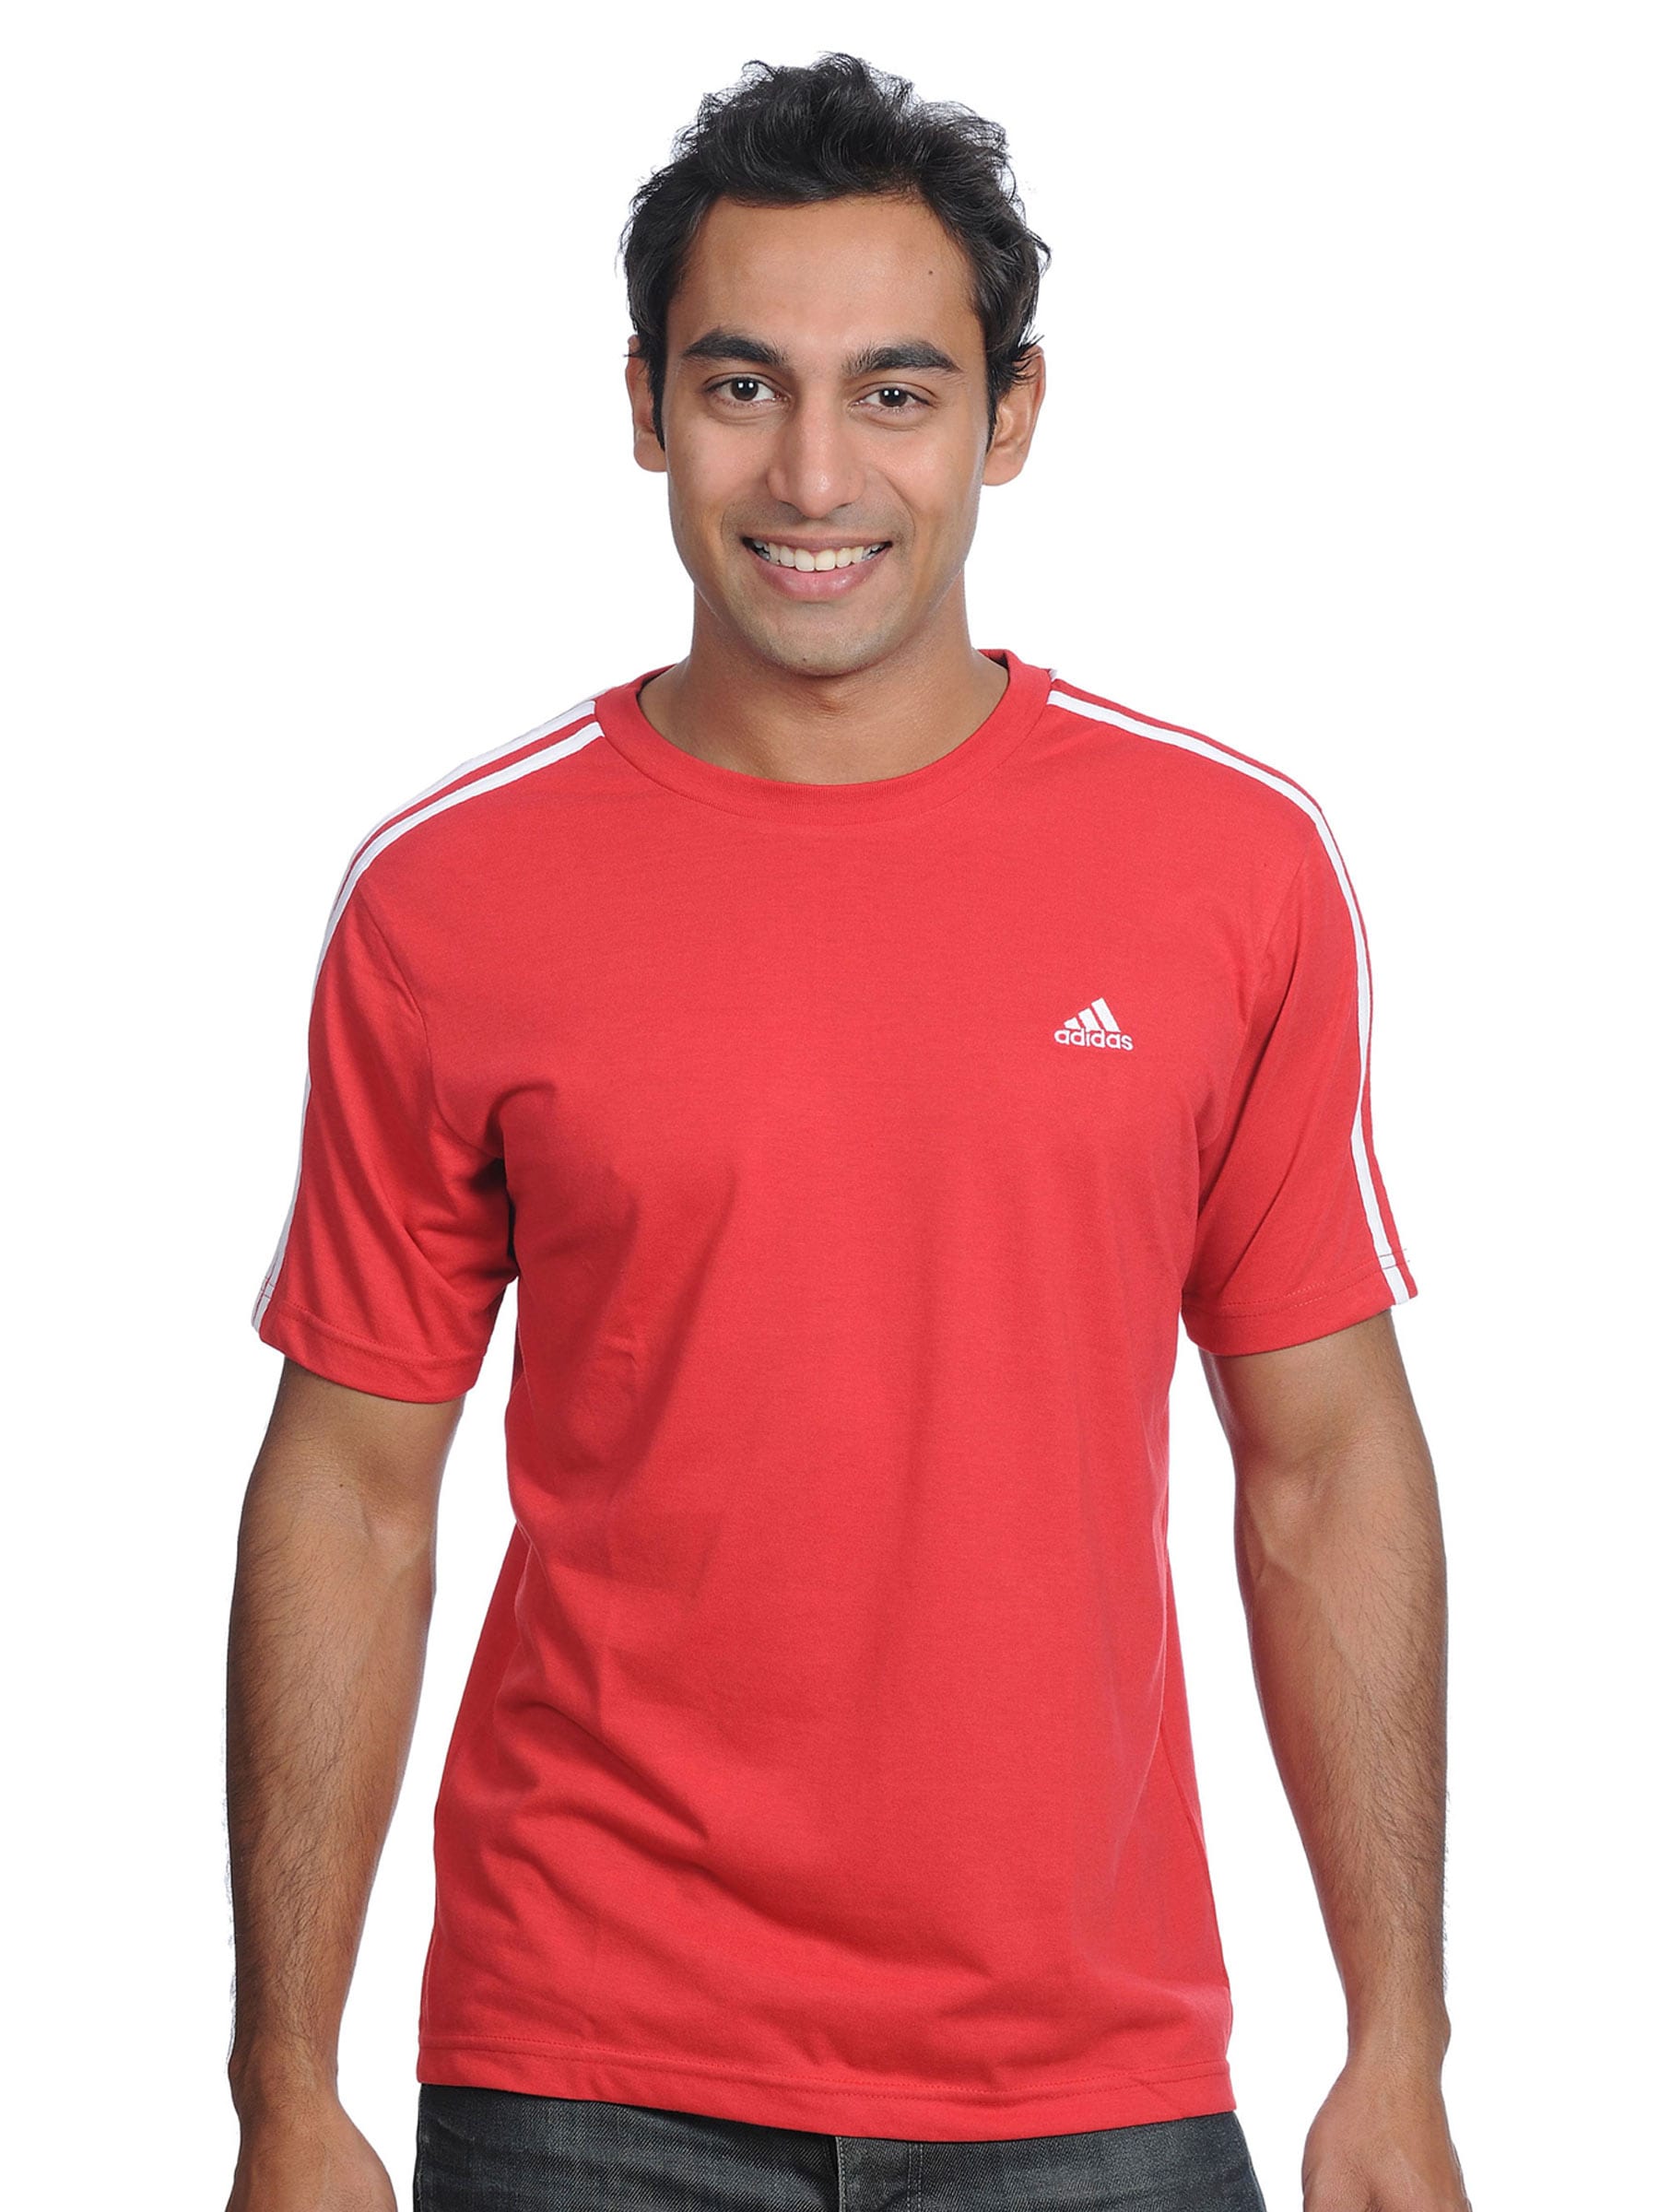 ADIDAS Mens Crew Red T-shirt